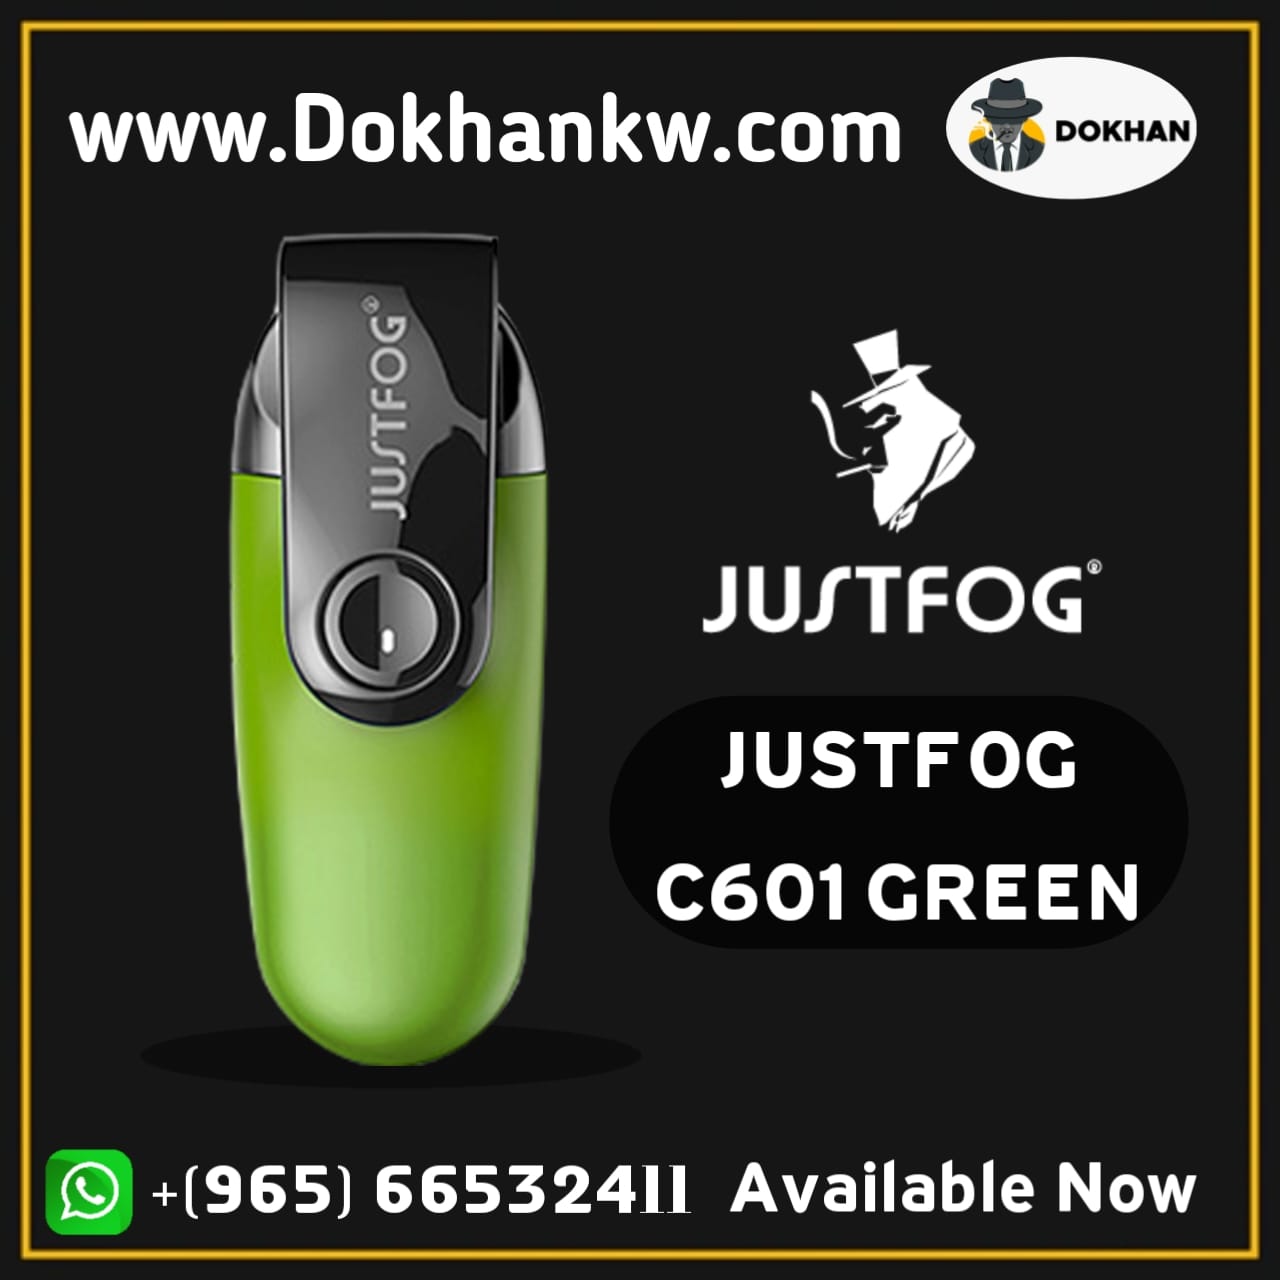 JUSTFOG C601 GREEN